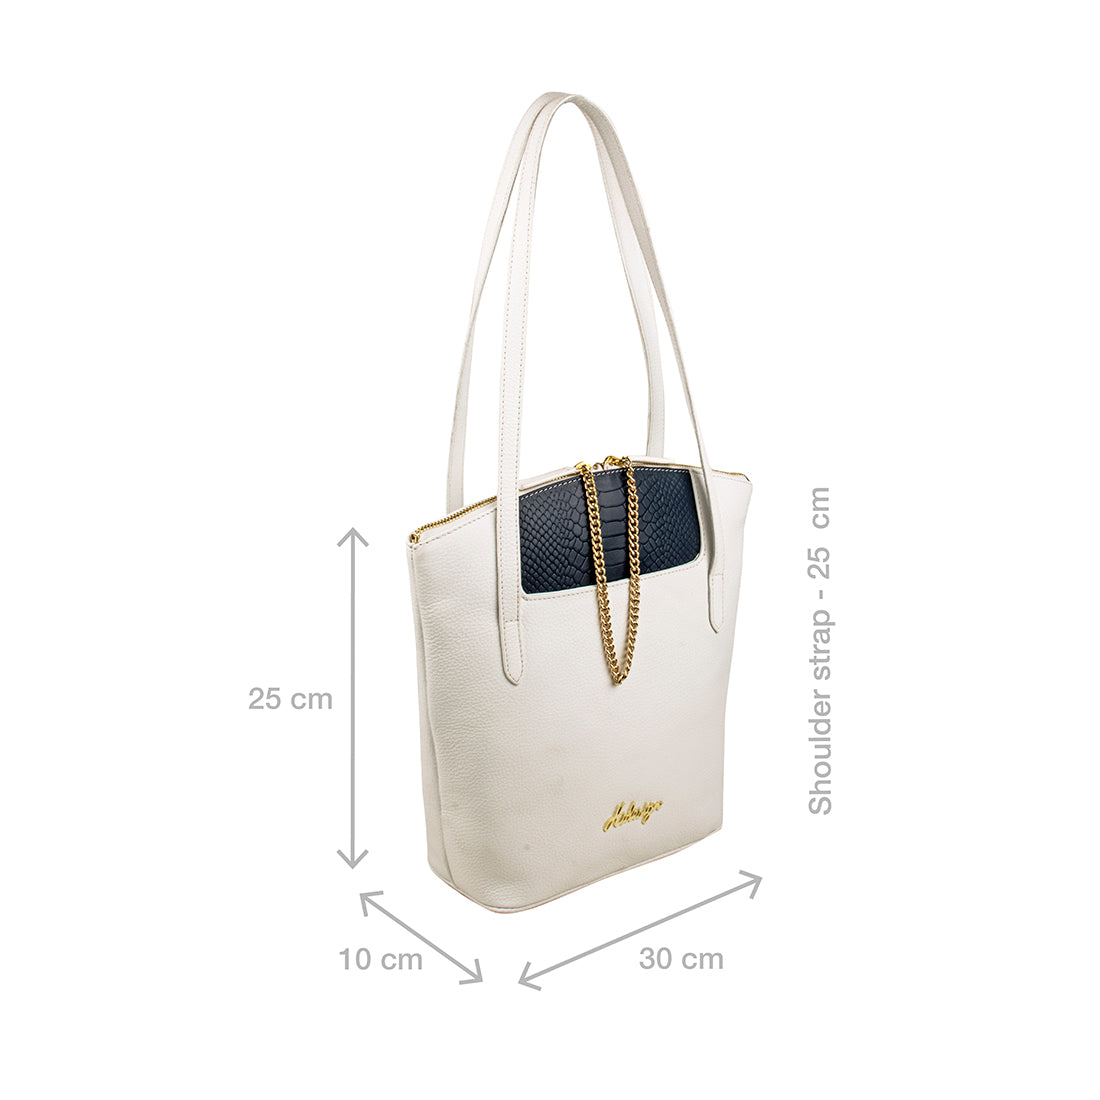 Hidesign White Leather Bag Purse